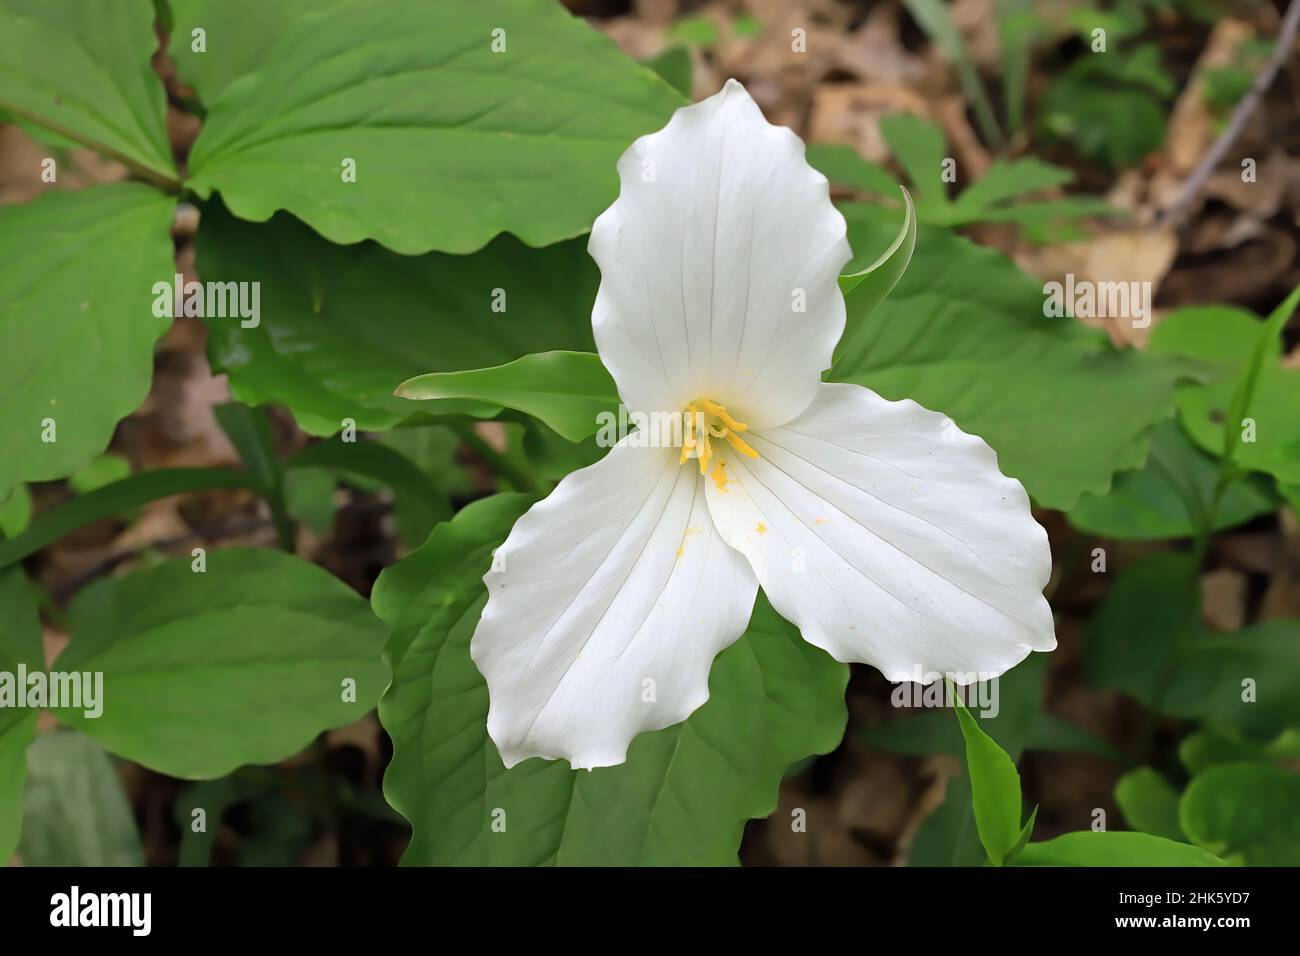 Beautiful white, three petaled trillium found growing in the springtime woods. Stock Photo